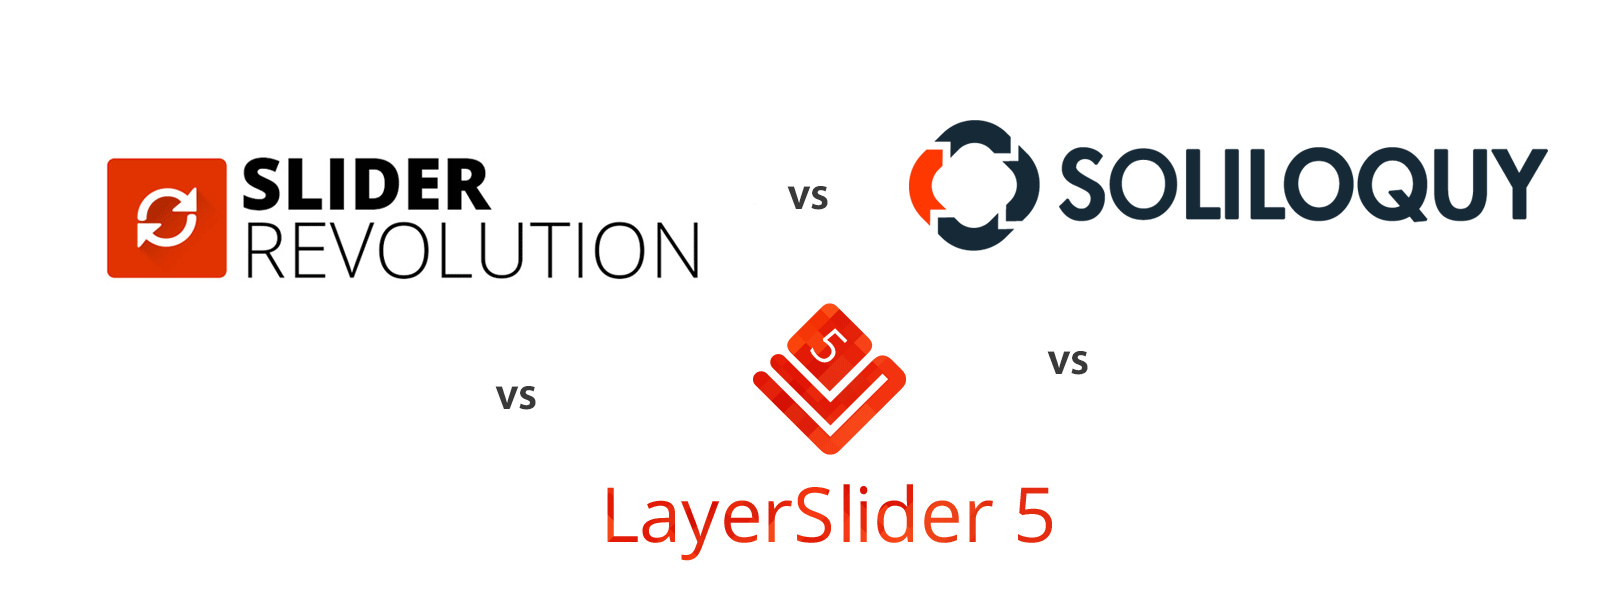 Slider Revolution, LayerSlider or Soliloquy - The Best WordPress Slider Plugins Compared